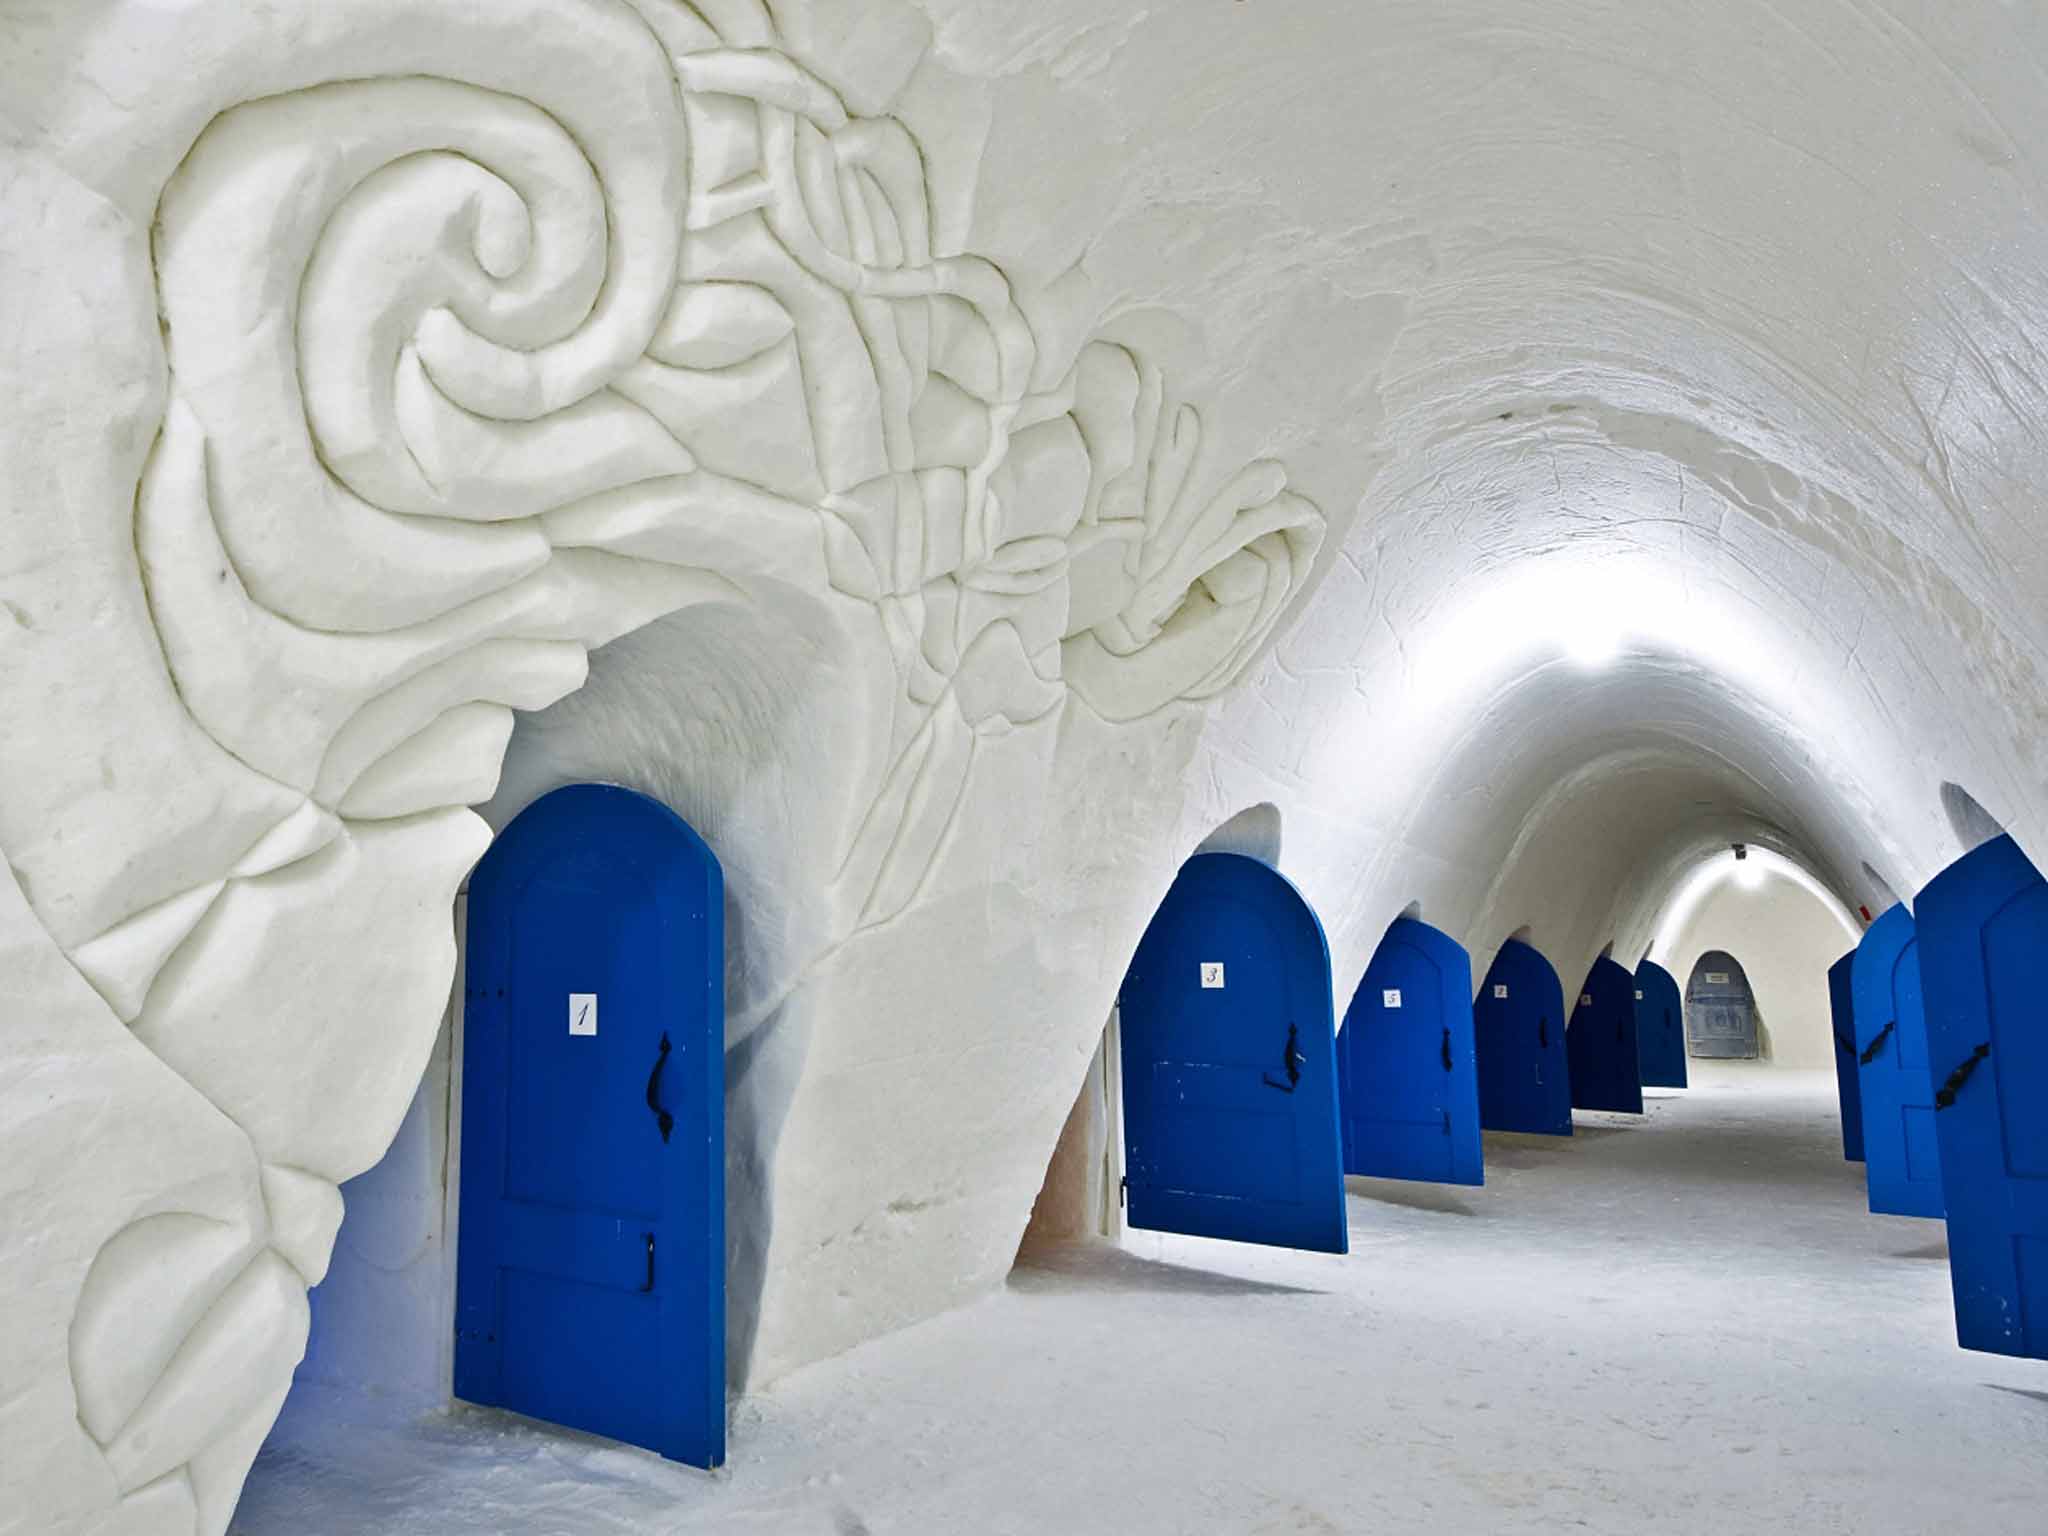 The Snow Castle of Kemi in Finland